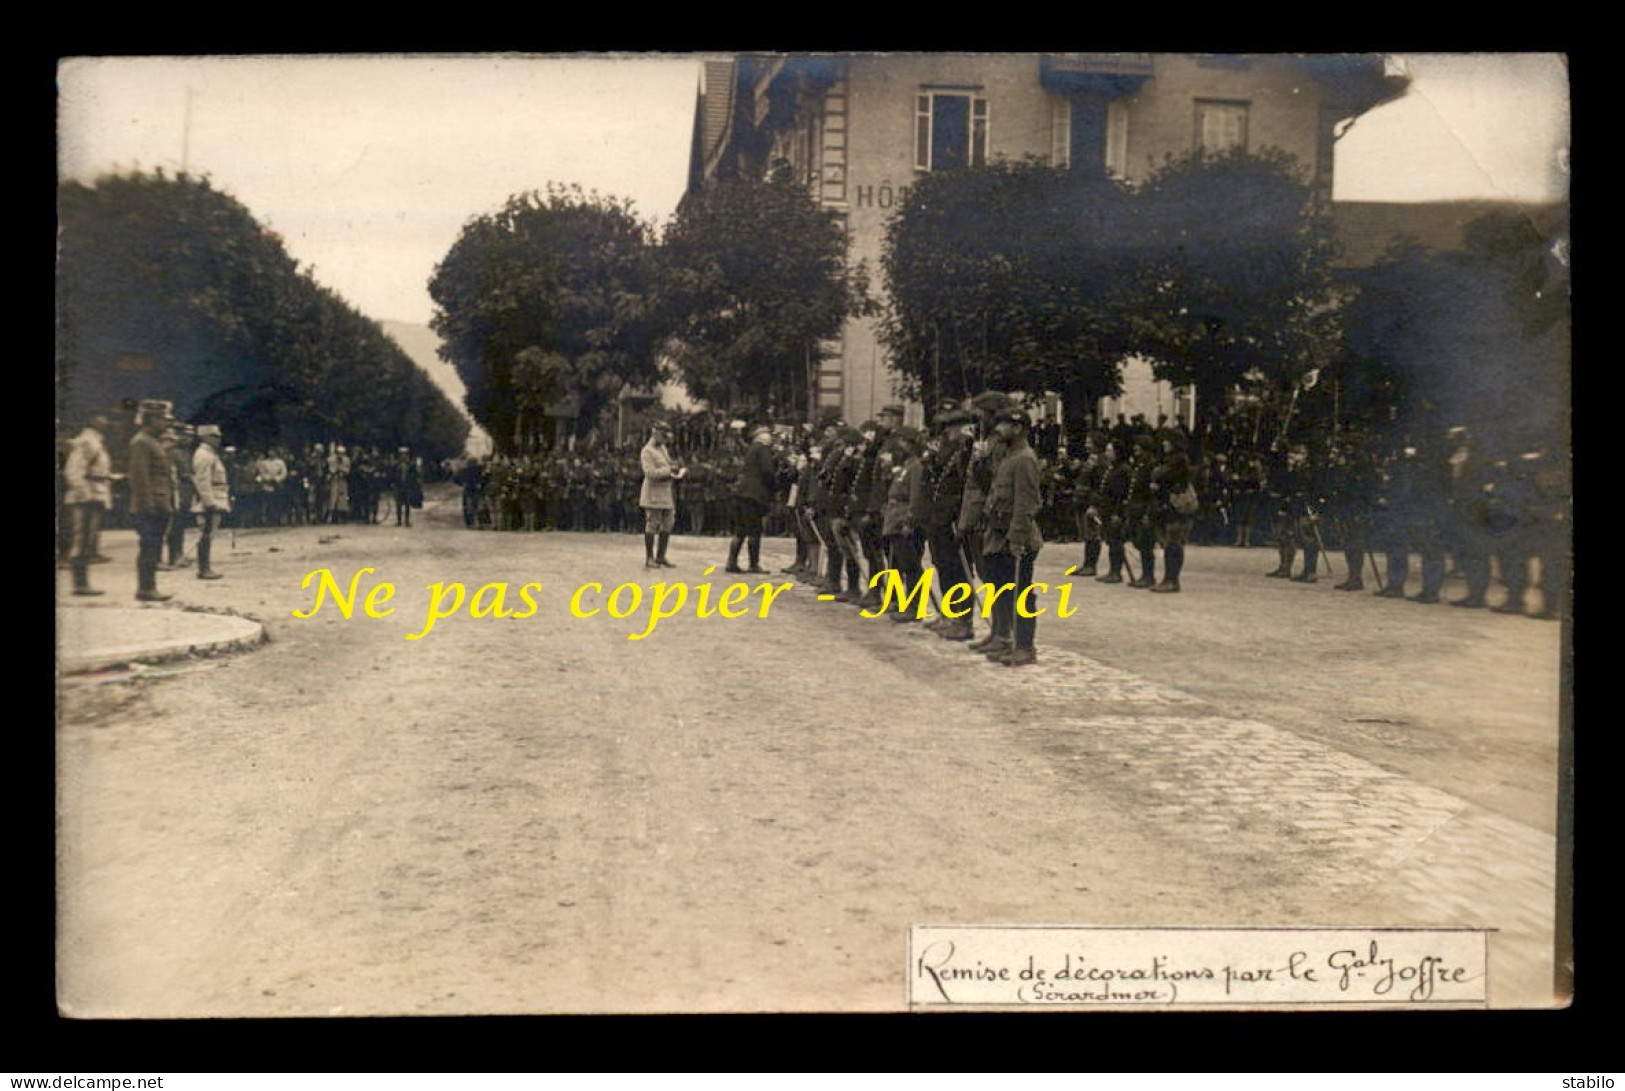 88 - GERARDMER -  REMISE DE DECORATIONS PAR LE GAL JOFFRE AVRIL 1916 - 4 CARTES PHOTOS ORIGINALES - Gerardmer